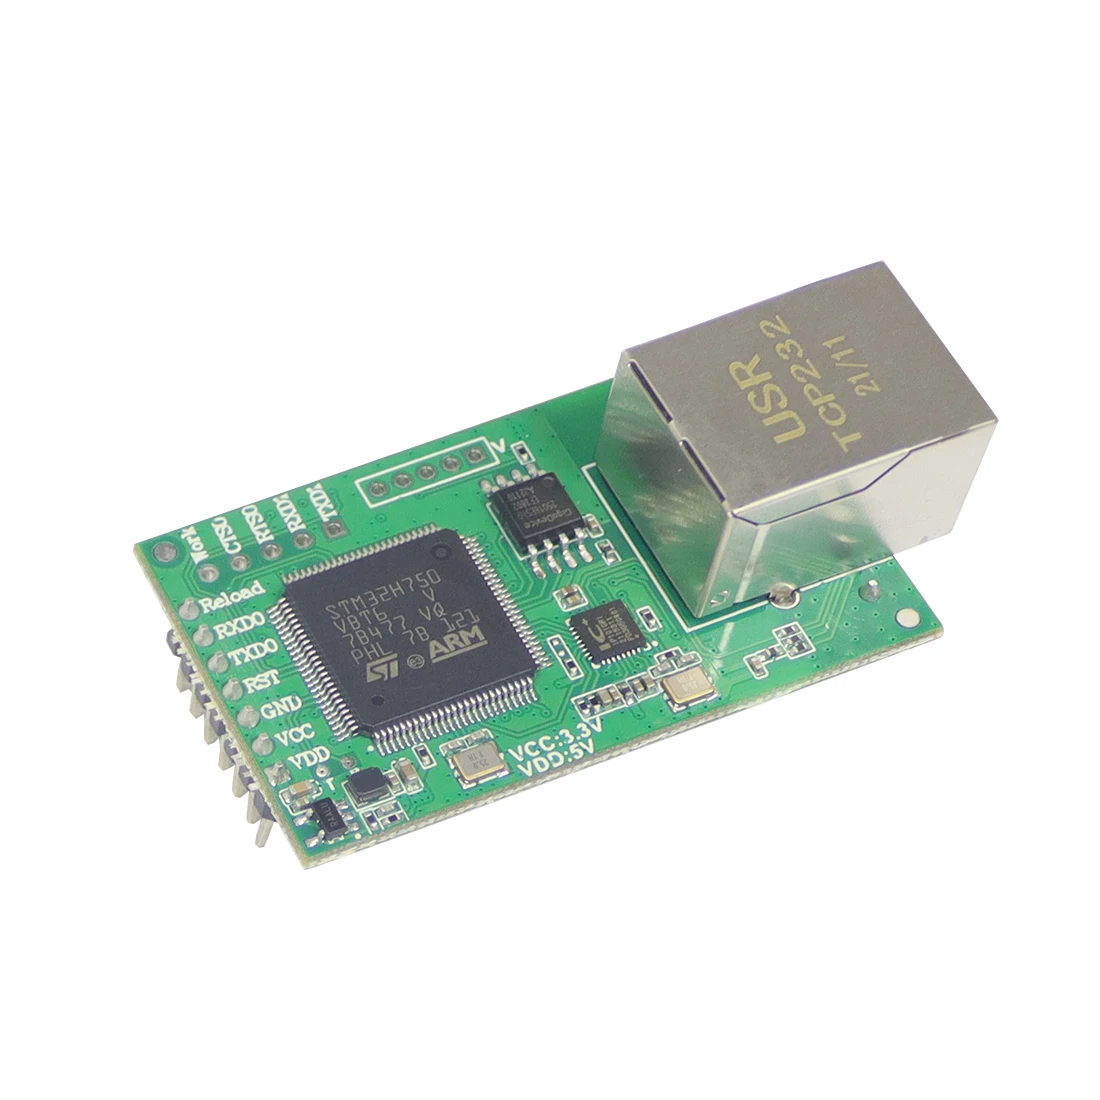 

1 piece USR-TCP232-E2 Pin Type Serial UART TTL to LAN Ethernet Module 2 serial ports